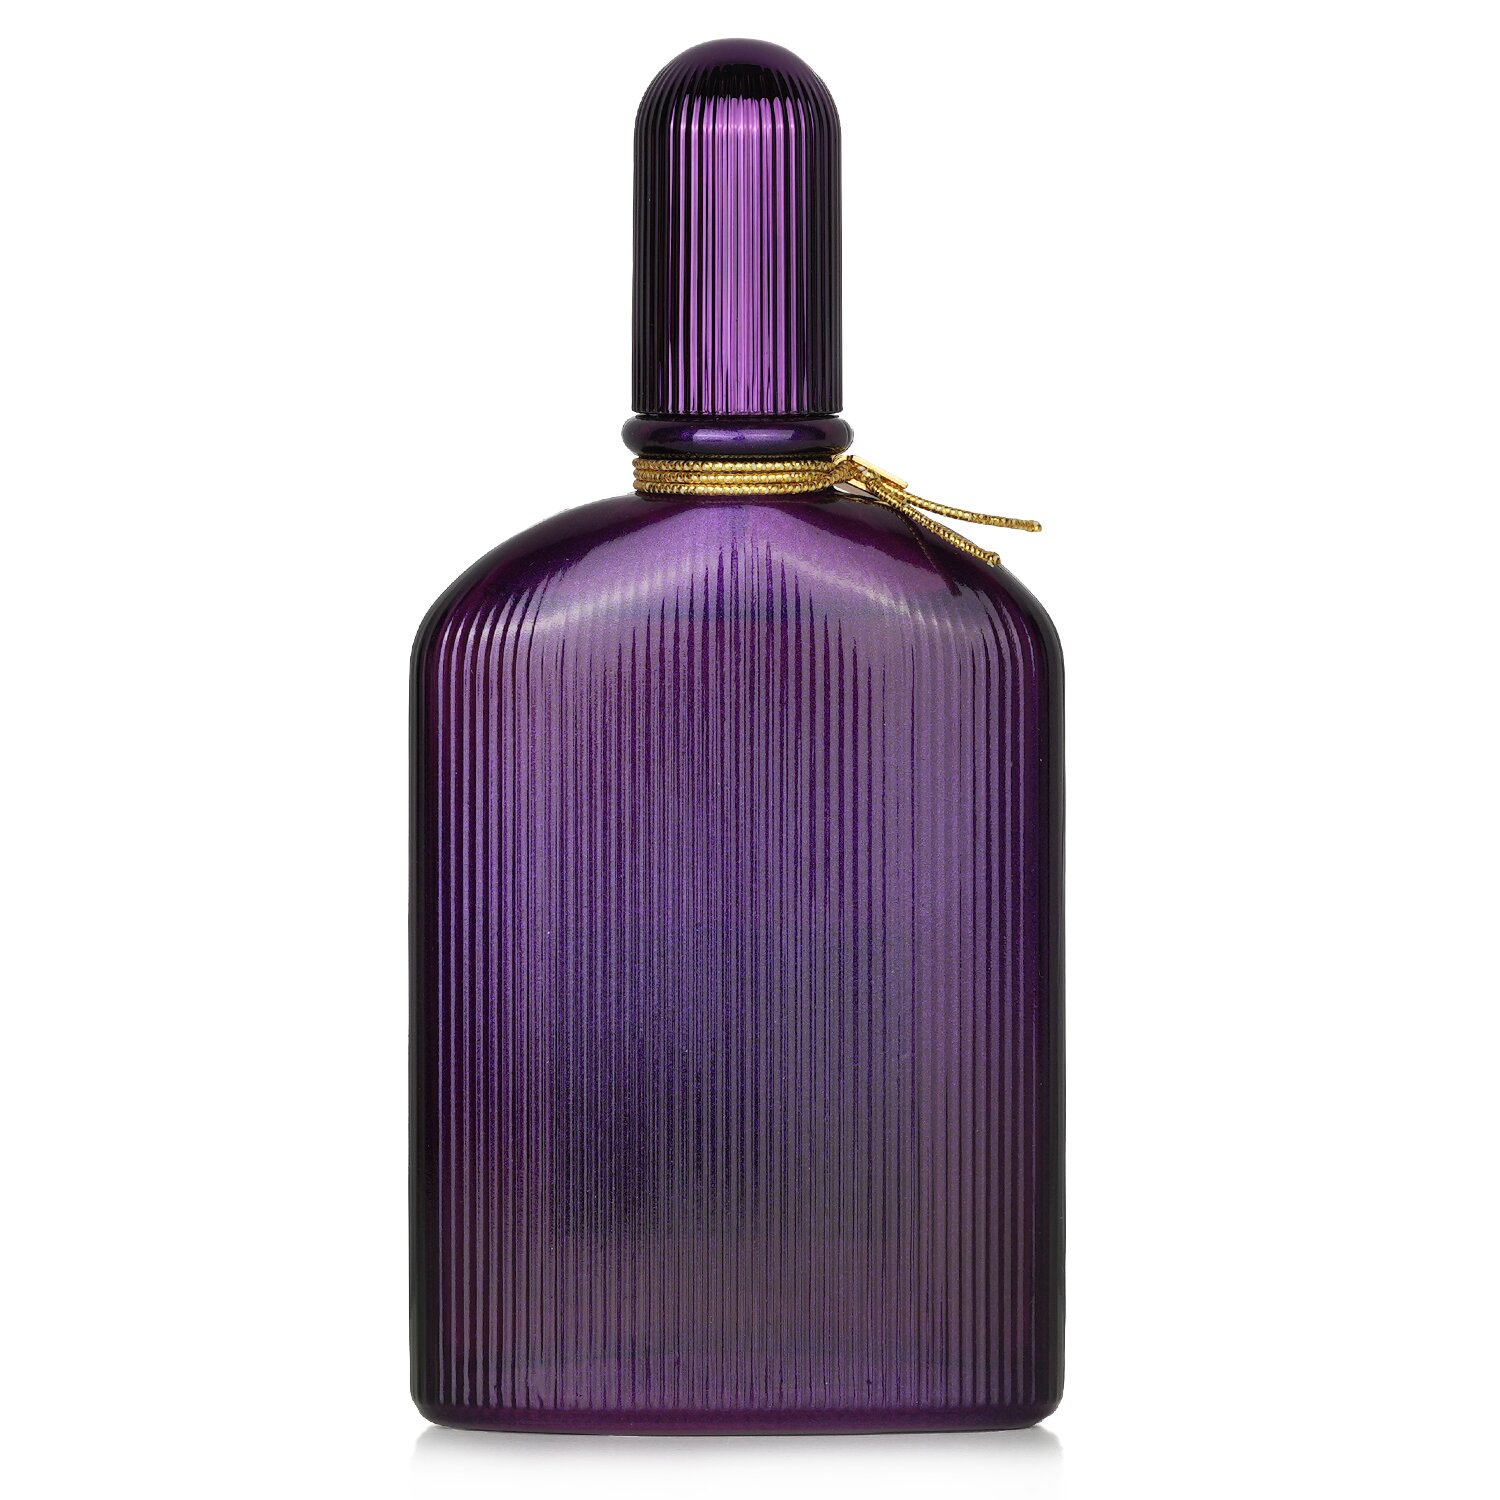 Tom Ford Velvet Orchid Eau De Parfum Spray 50ml/1.7oz